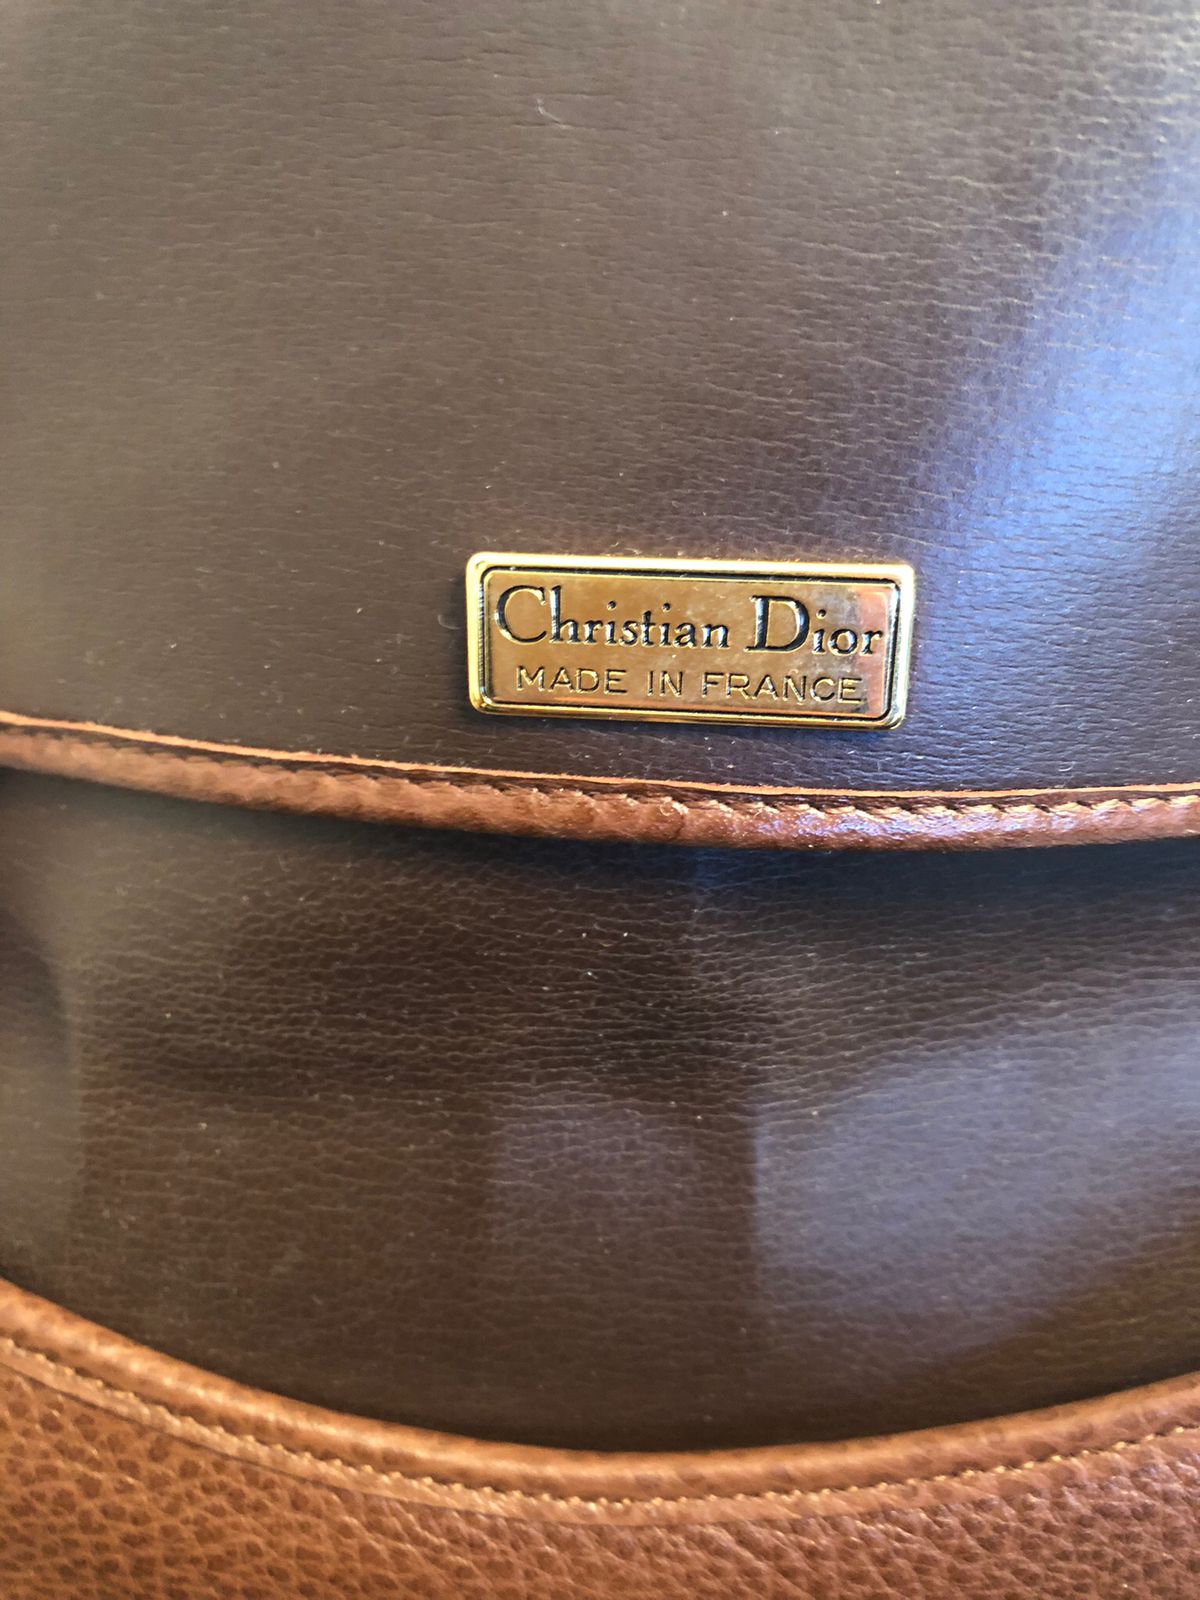 CHRISTIAN DIOR Shoulder bags vintage Lysis Paris pre-owned secondhand